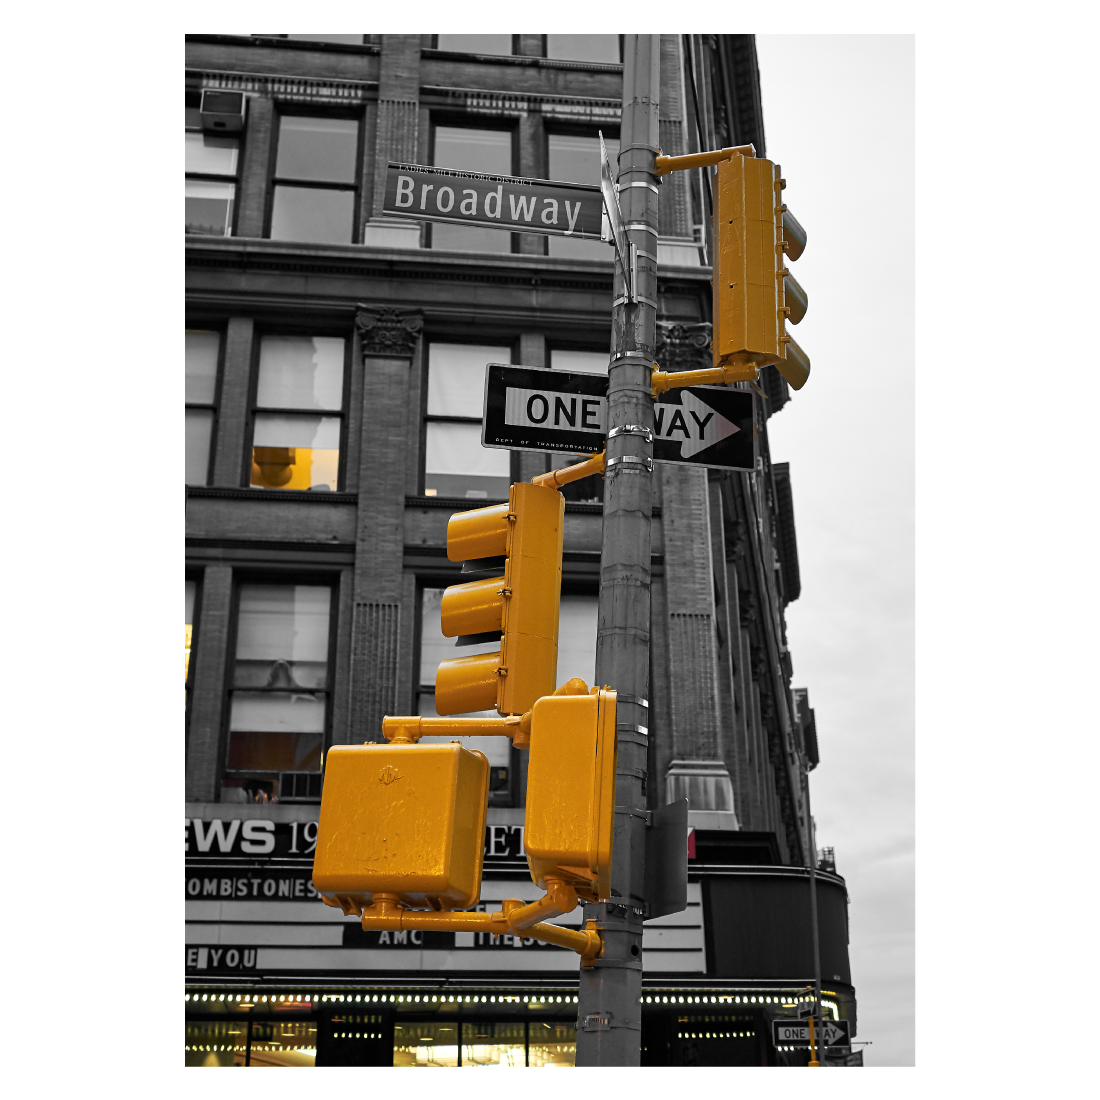 Byplakat med trafiklys på Broadway